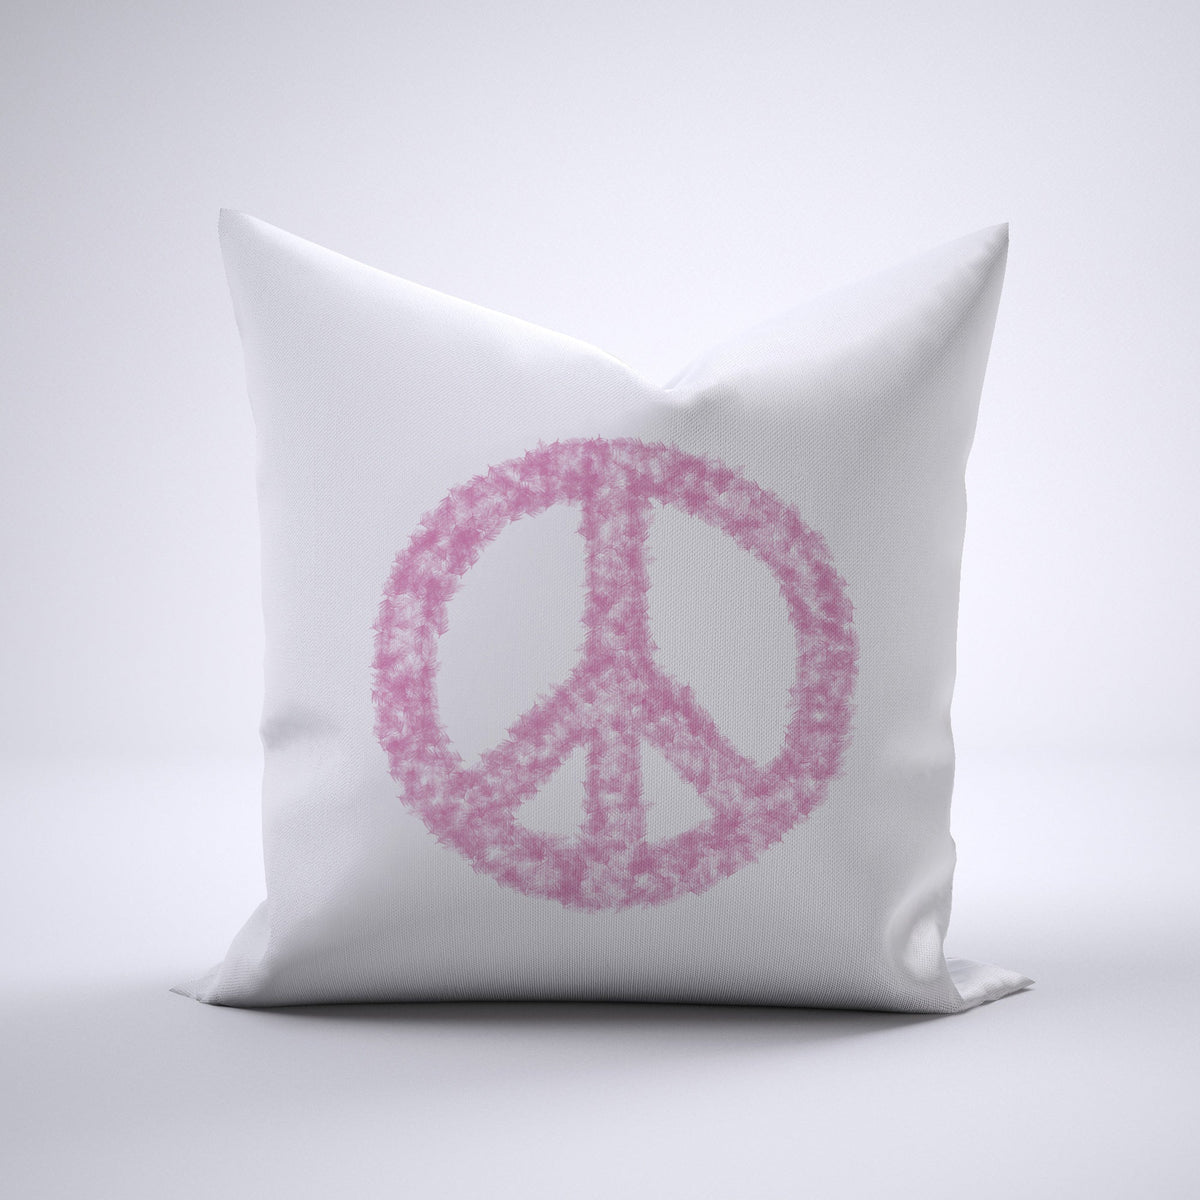 Throw Pillow - Peace Plumes Hot Pink Bedding, Pillows, Throw Pillows MWW 